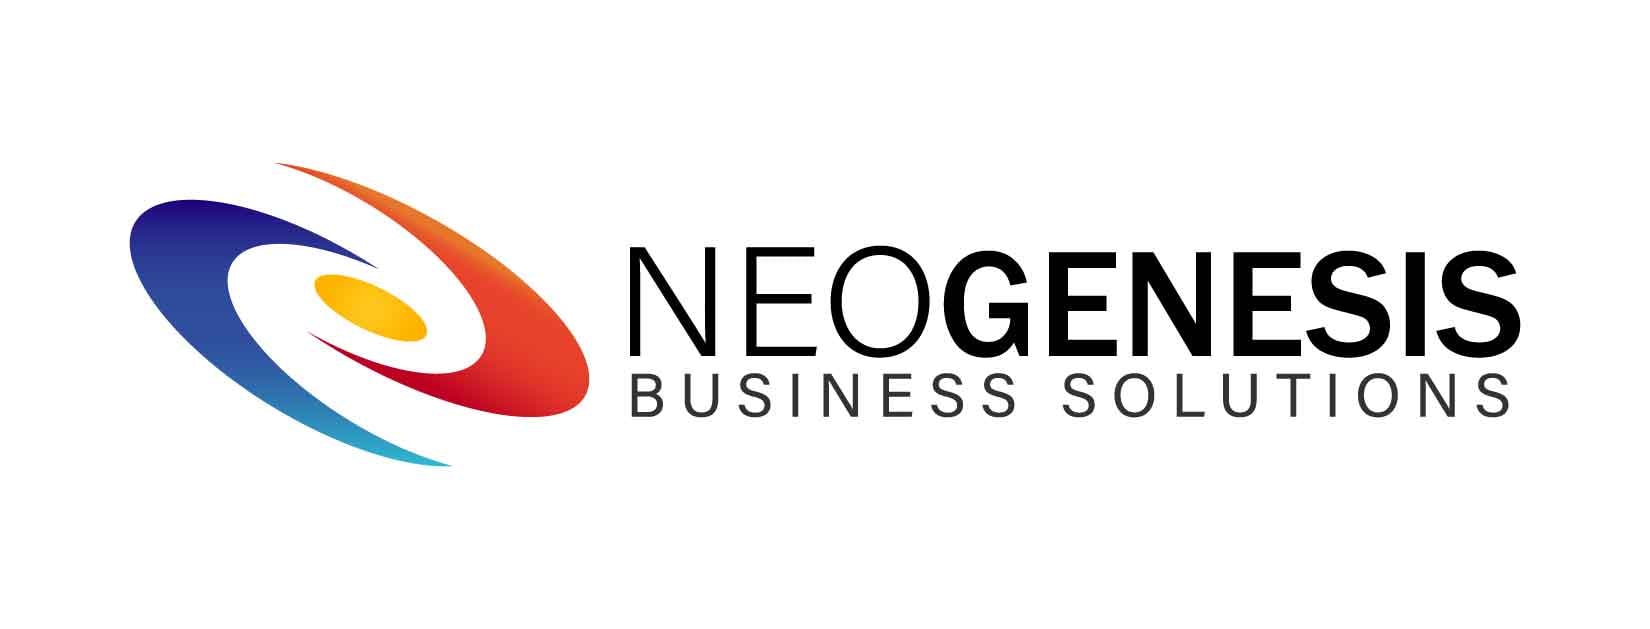 Neogenesis Business Solutions